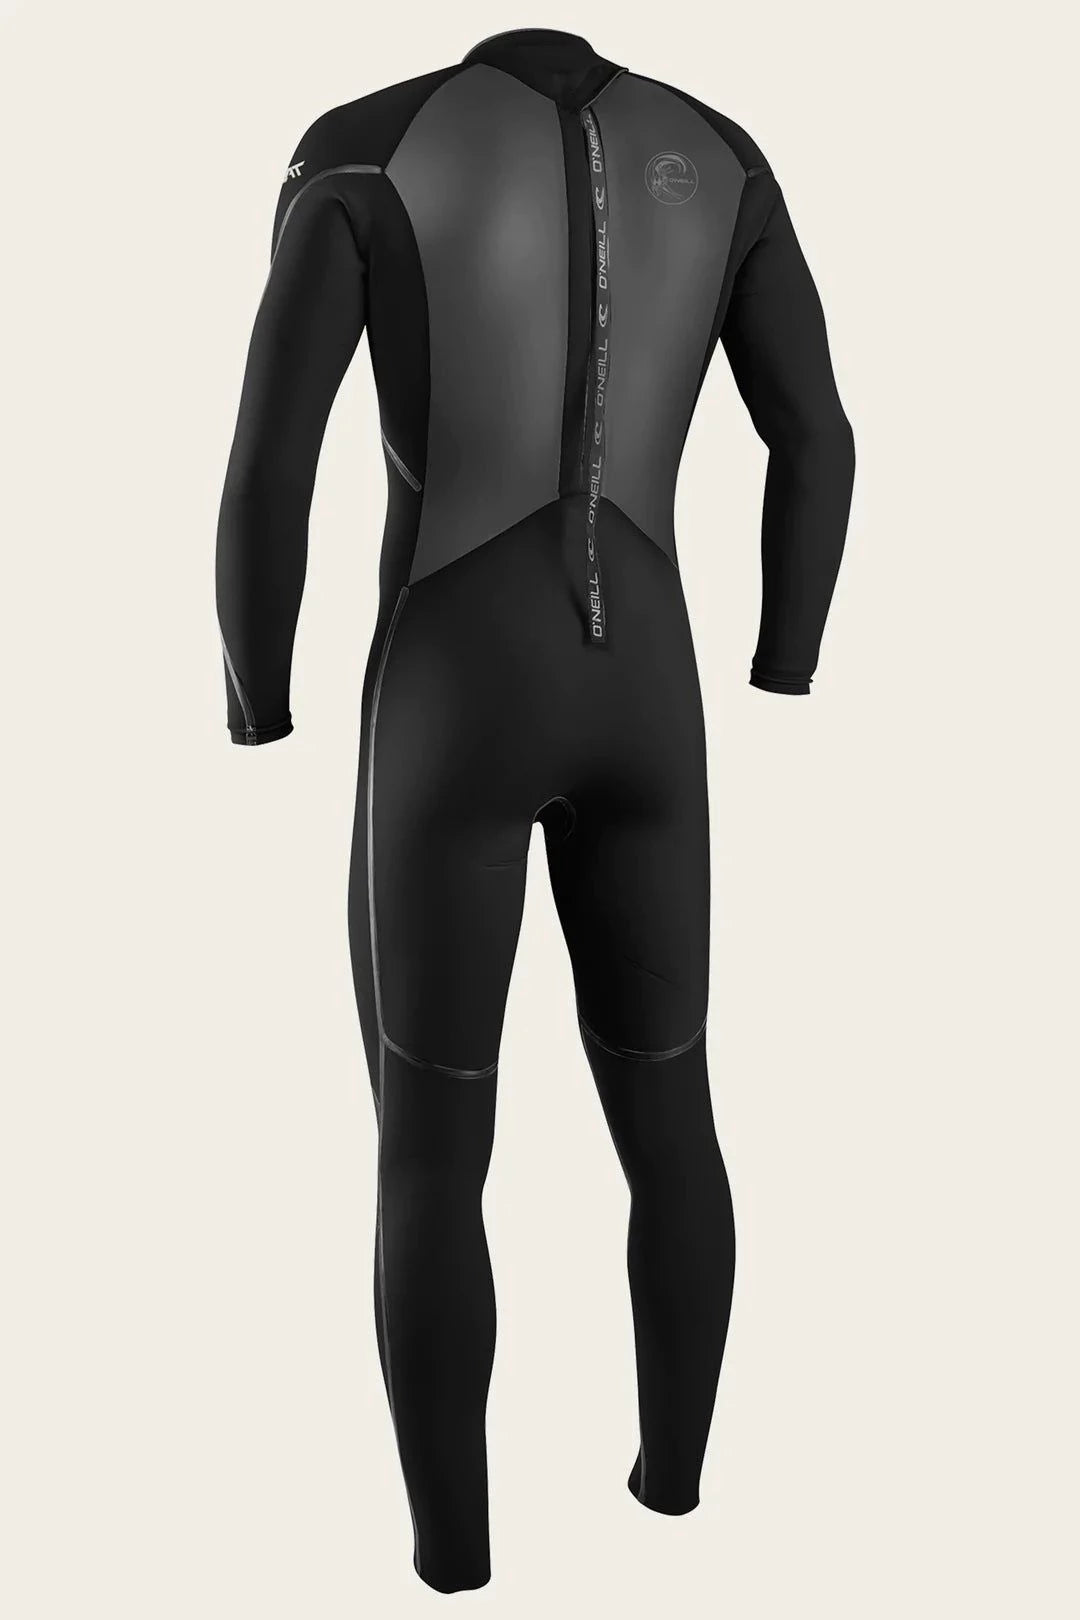 3/2 Heat Back Zip-O'Neill-back zip,black,fullsuit,hyperfreak,o'neill,oneill wetsuit,wetsuit